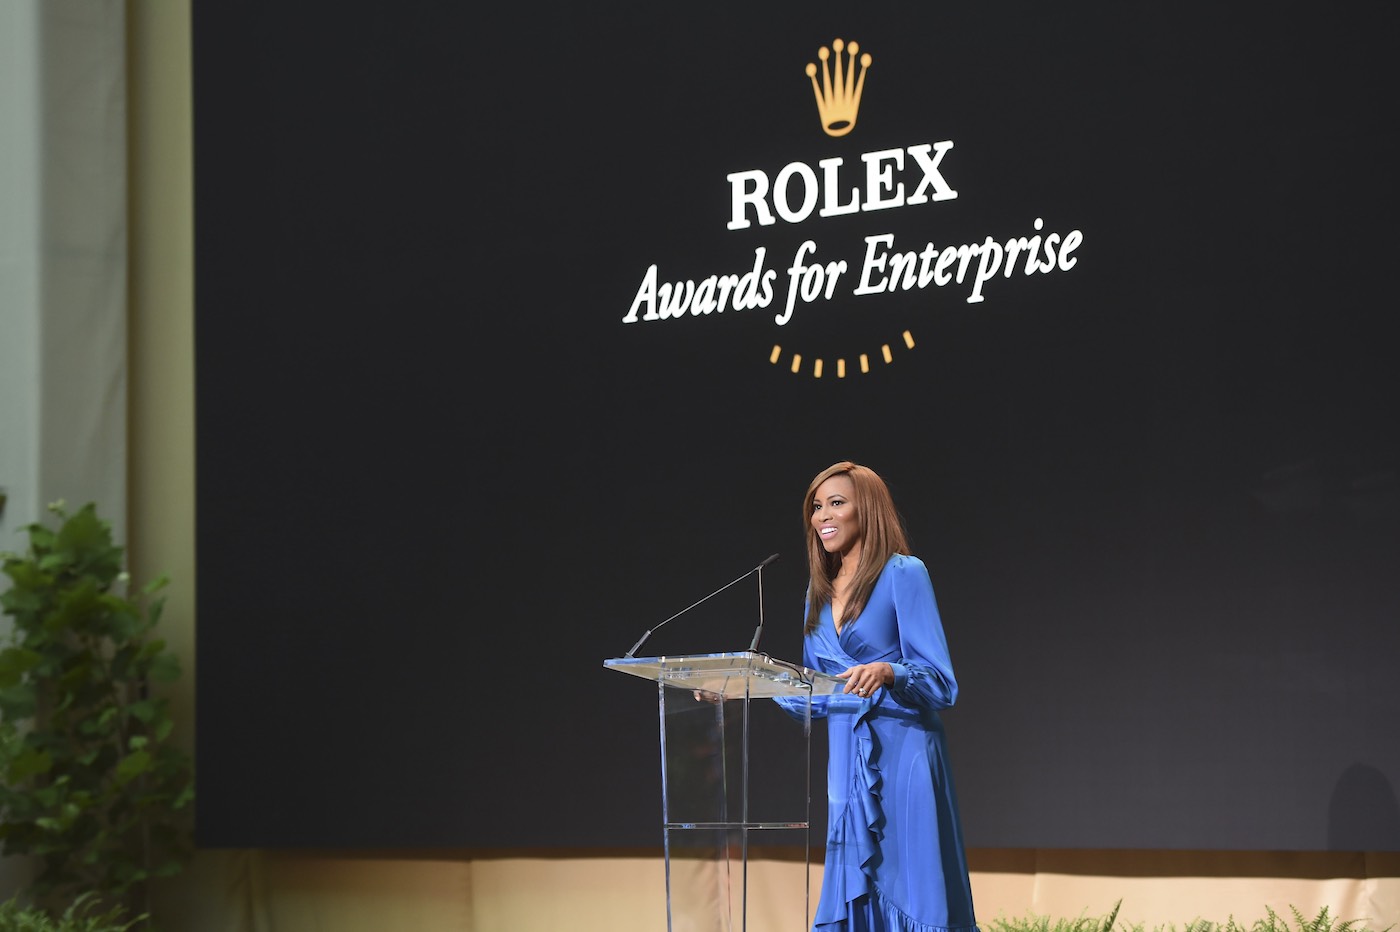 Rolex-Awards-For-Enterpise-2019-2021-Watch